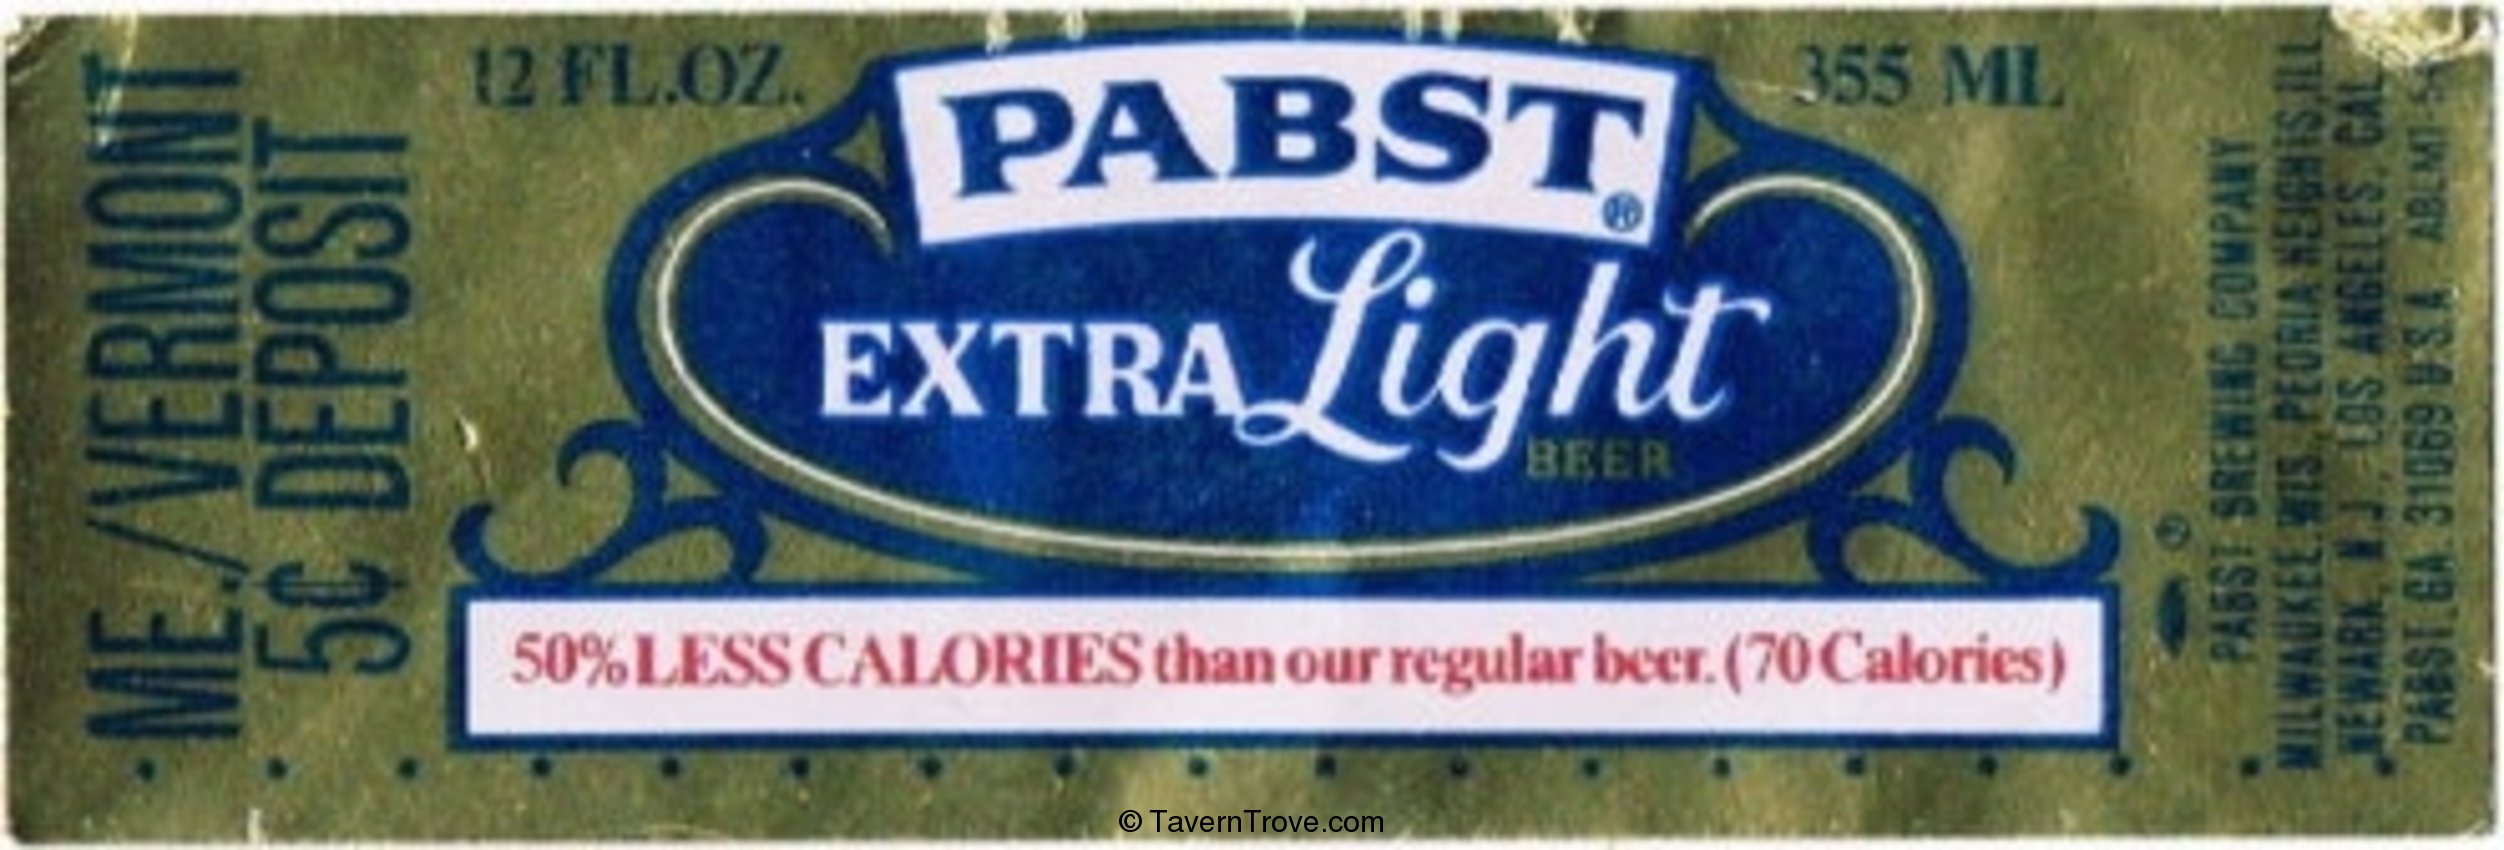 Pabst Extra Light Beer